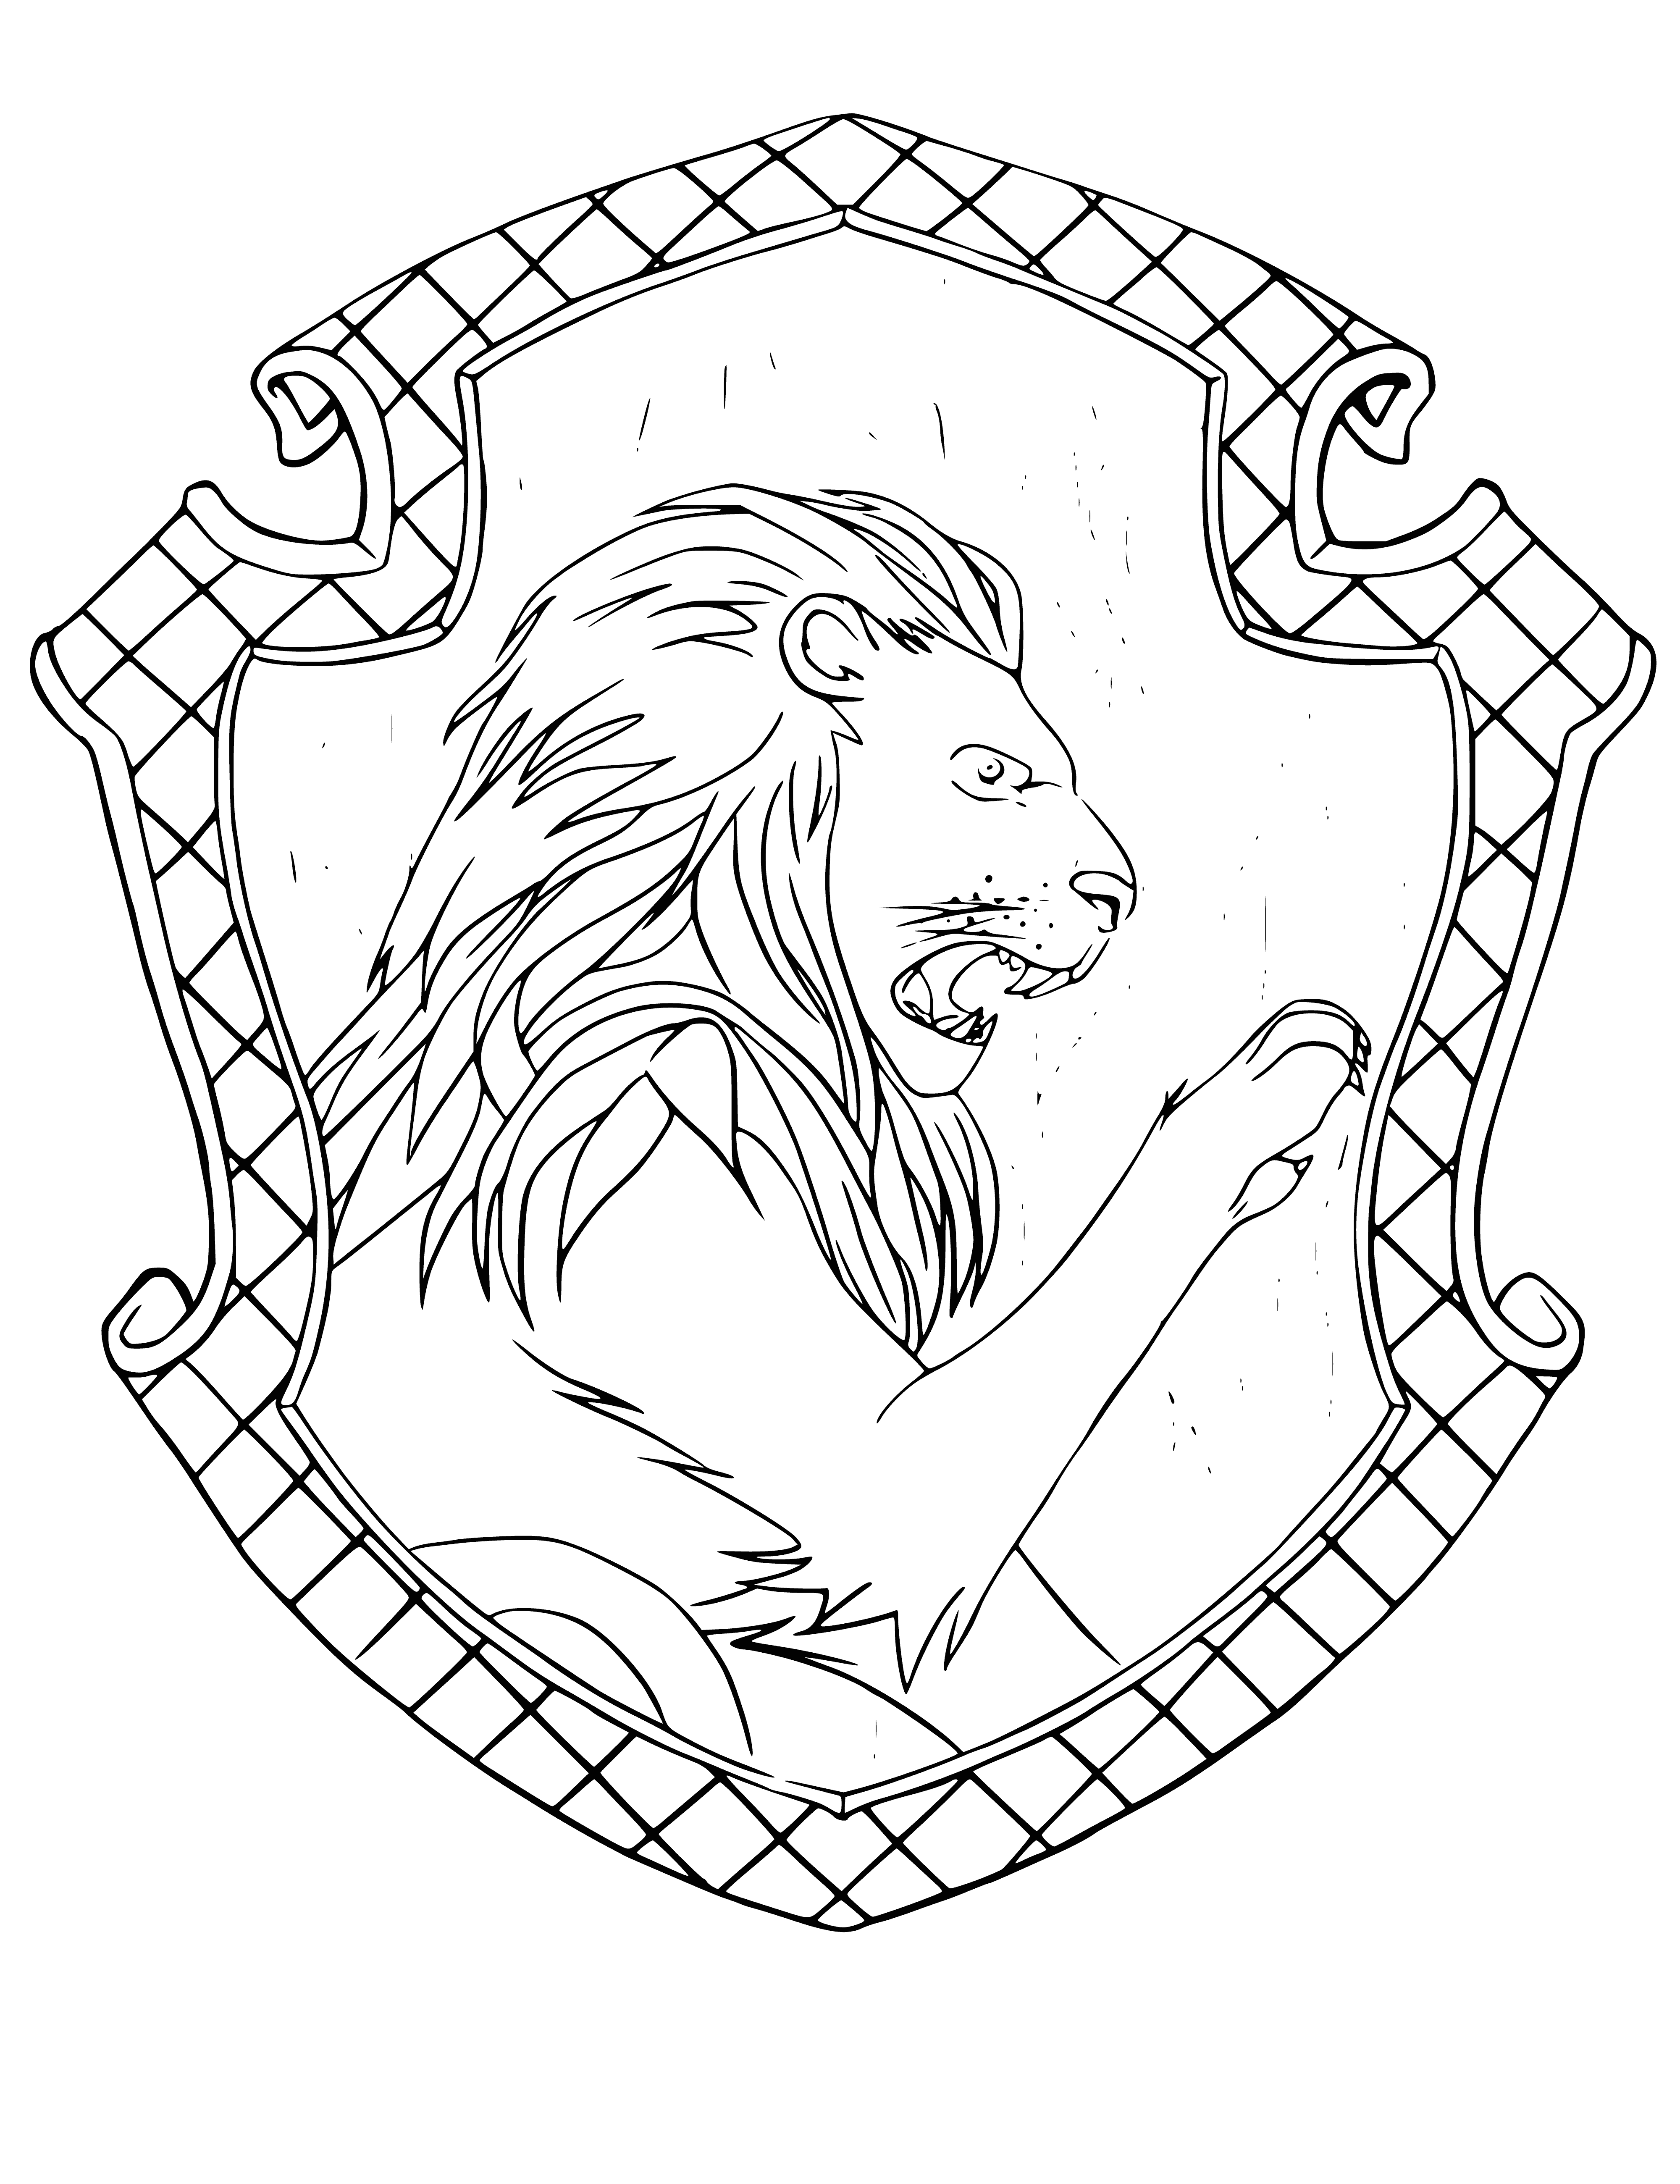 Gryffindor House Emblem coloring page